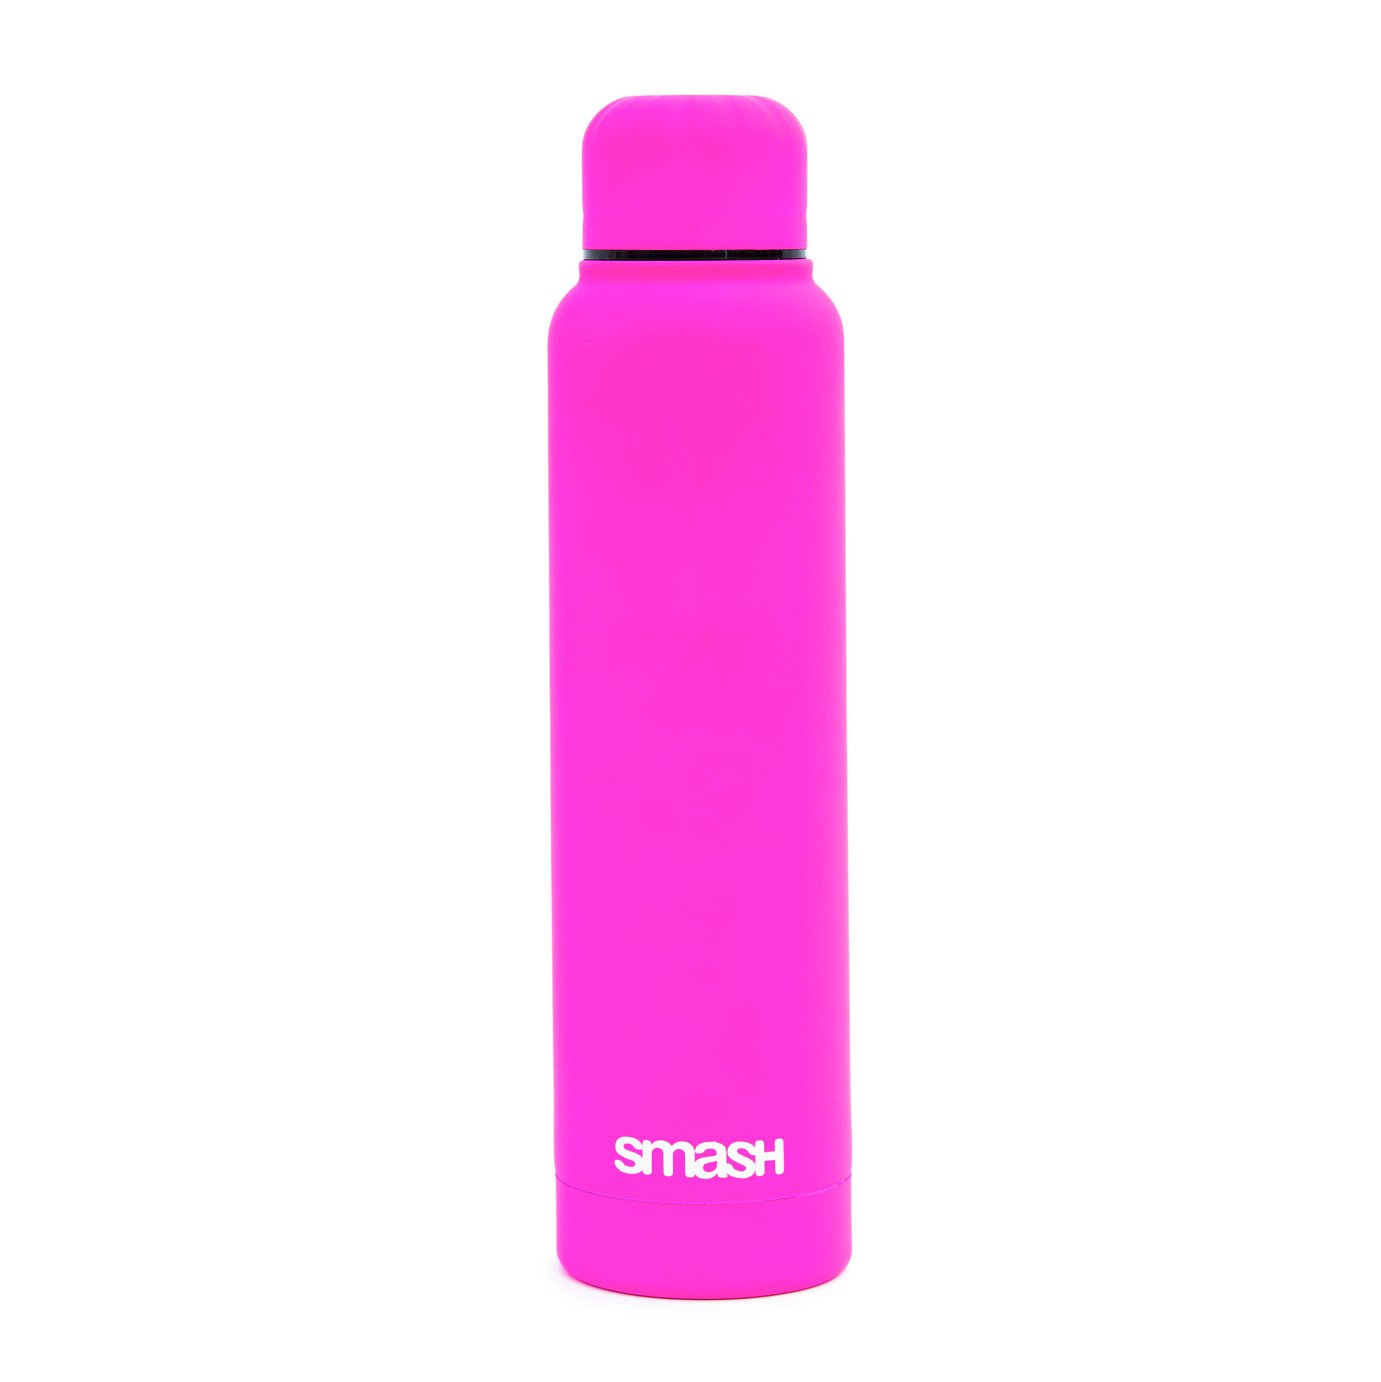 thermos water bottle argos